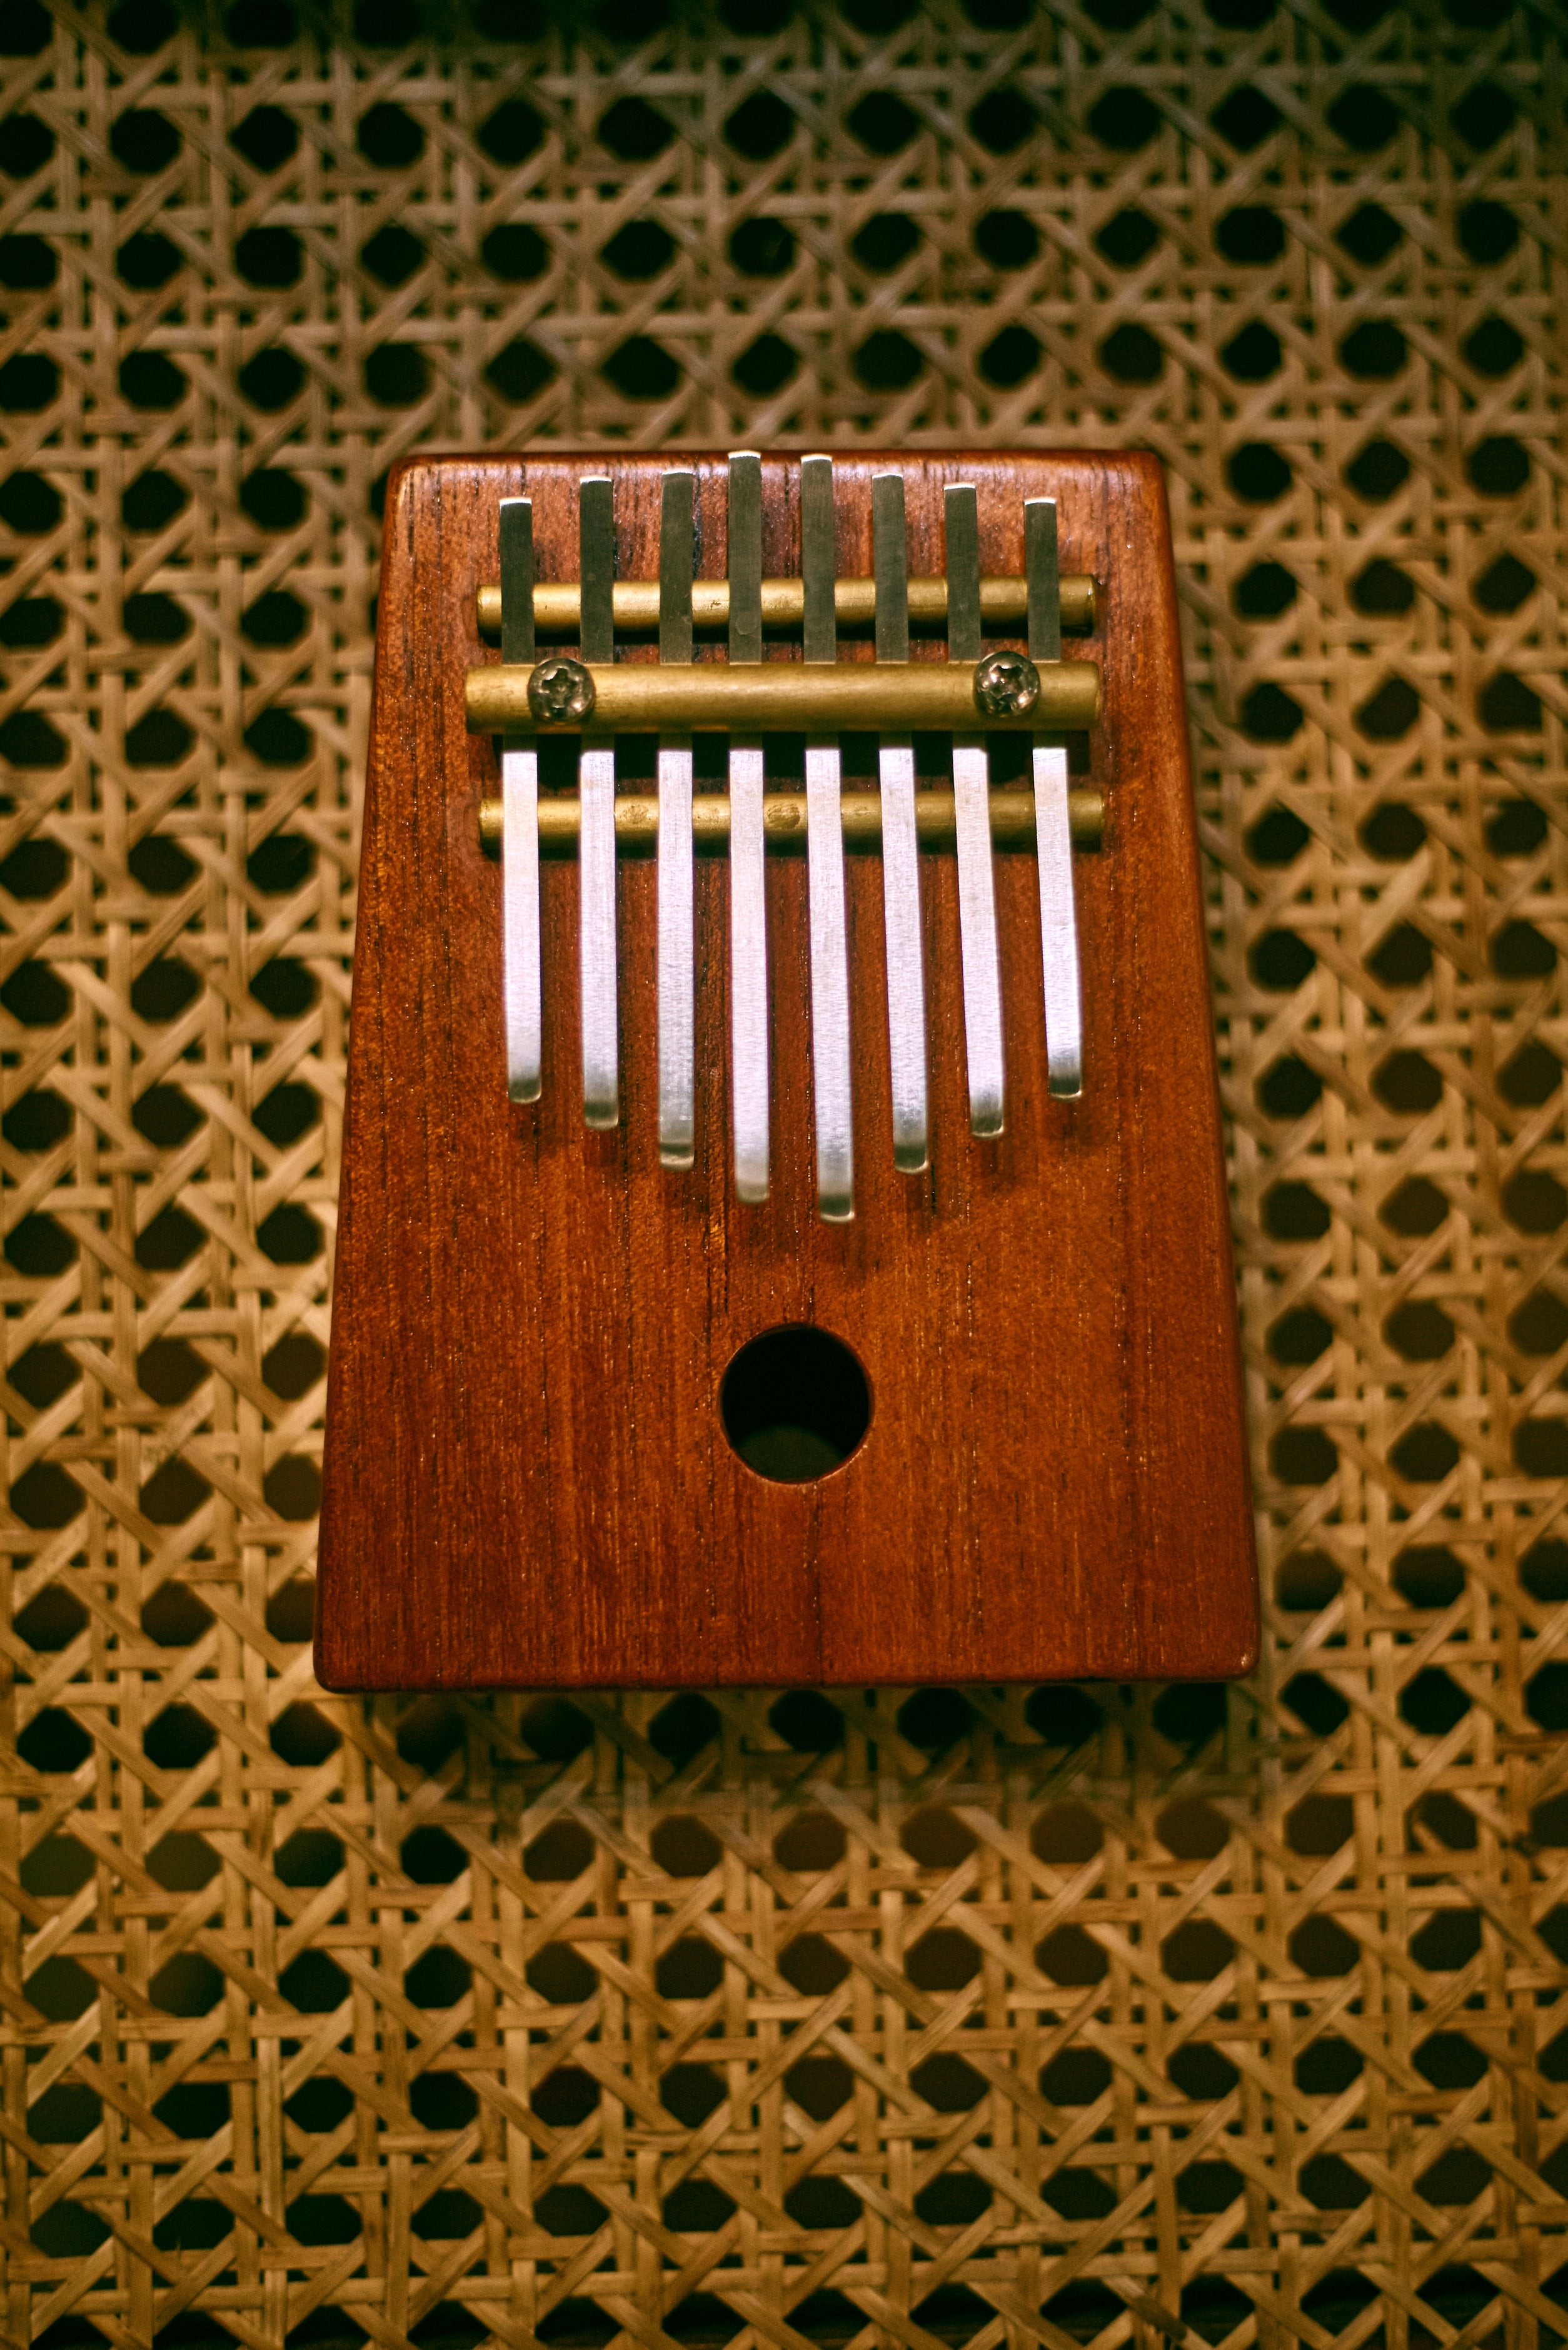 Kalimba Instrument